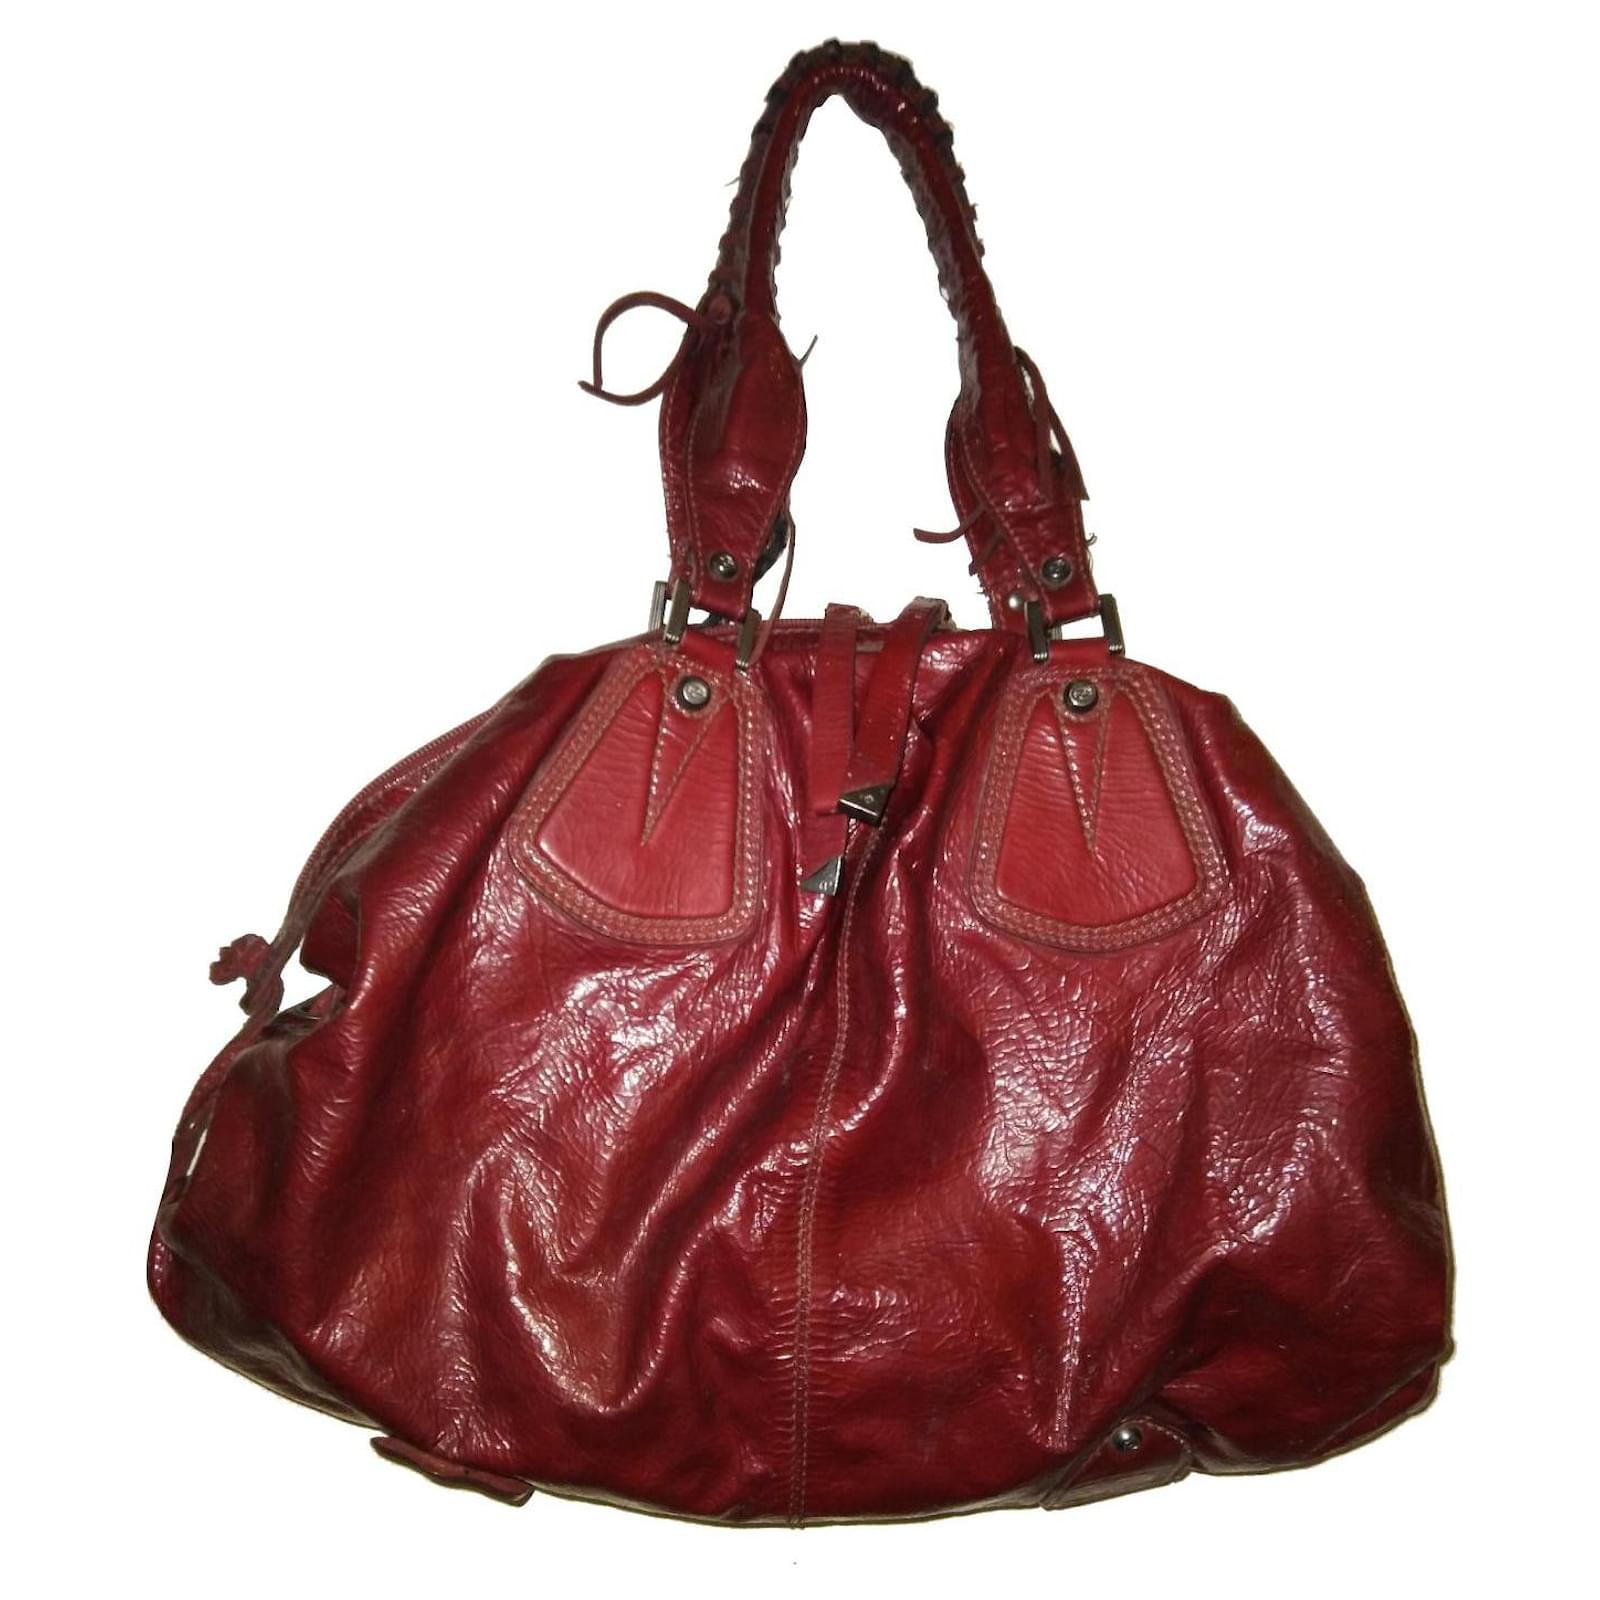 new) francesco biasia handbag | eBay